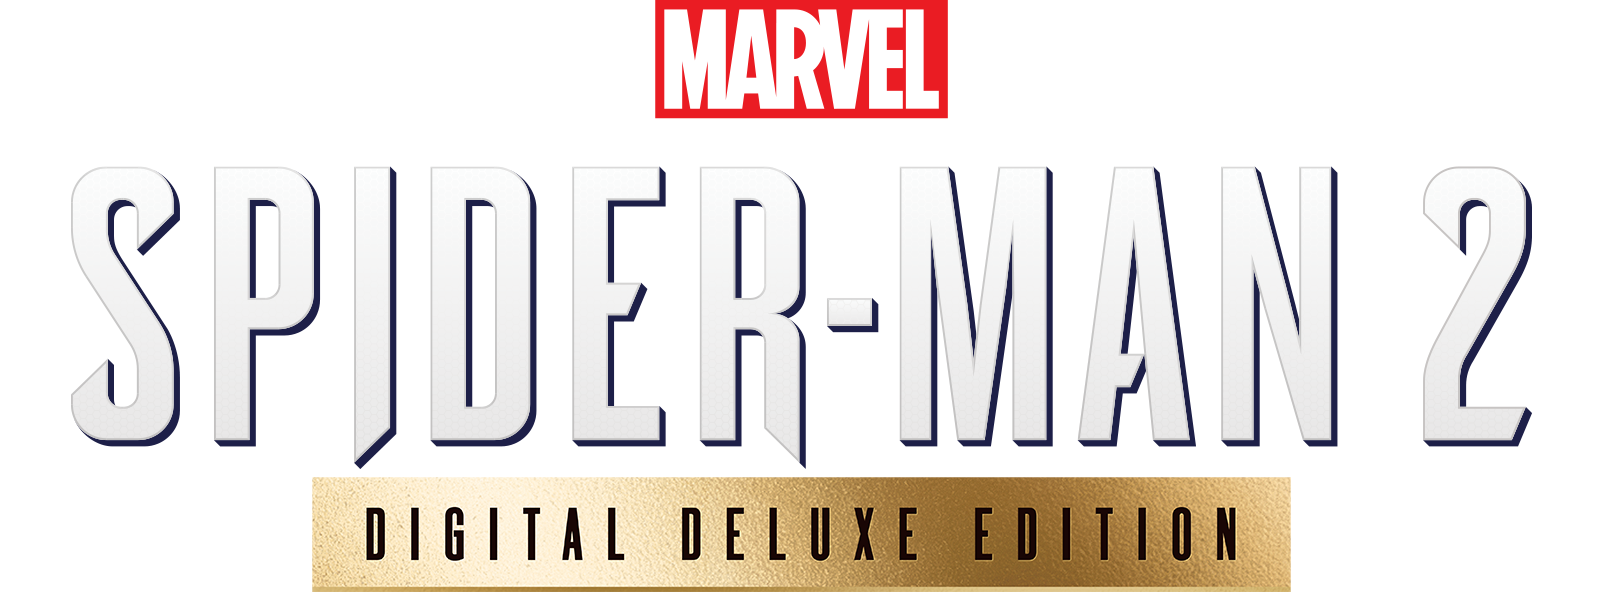 Jogo Marvels Spider Man 2 PlayStation 5, Shopping